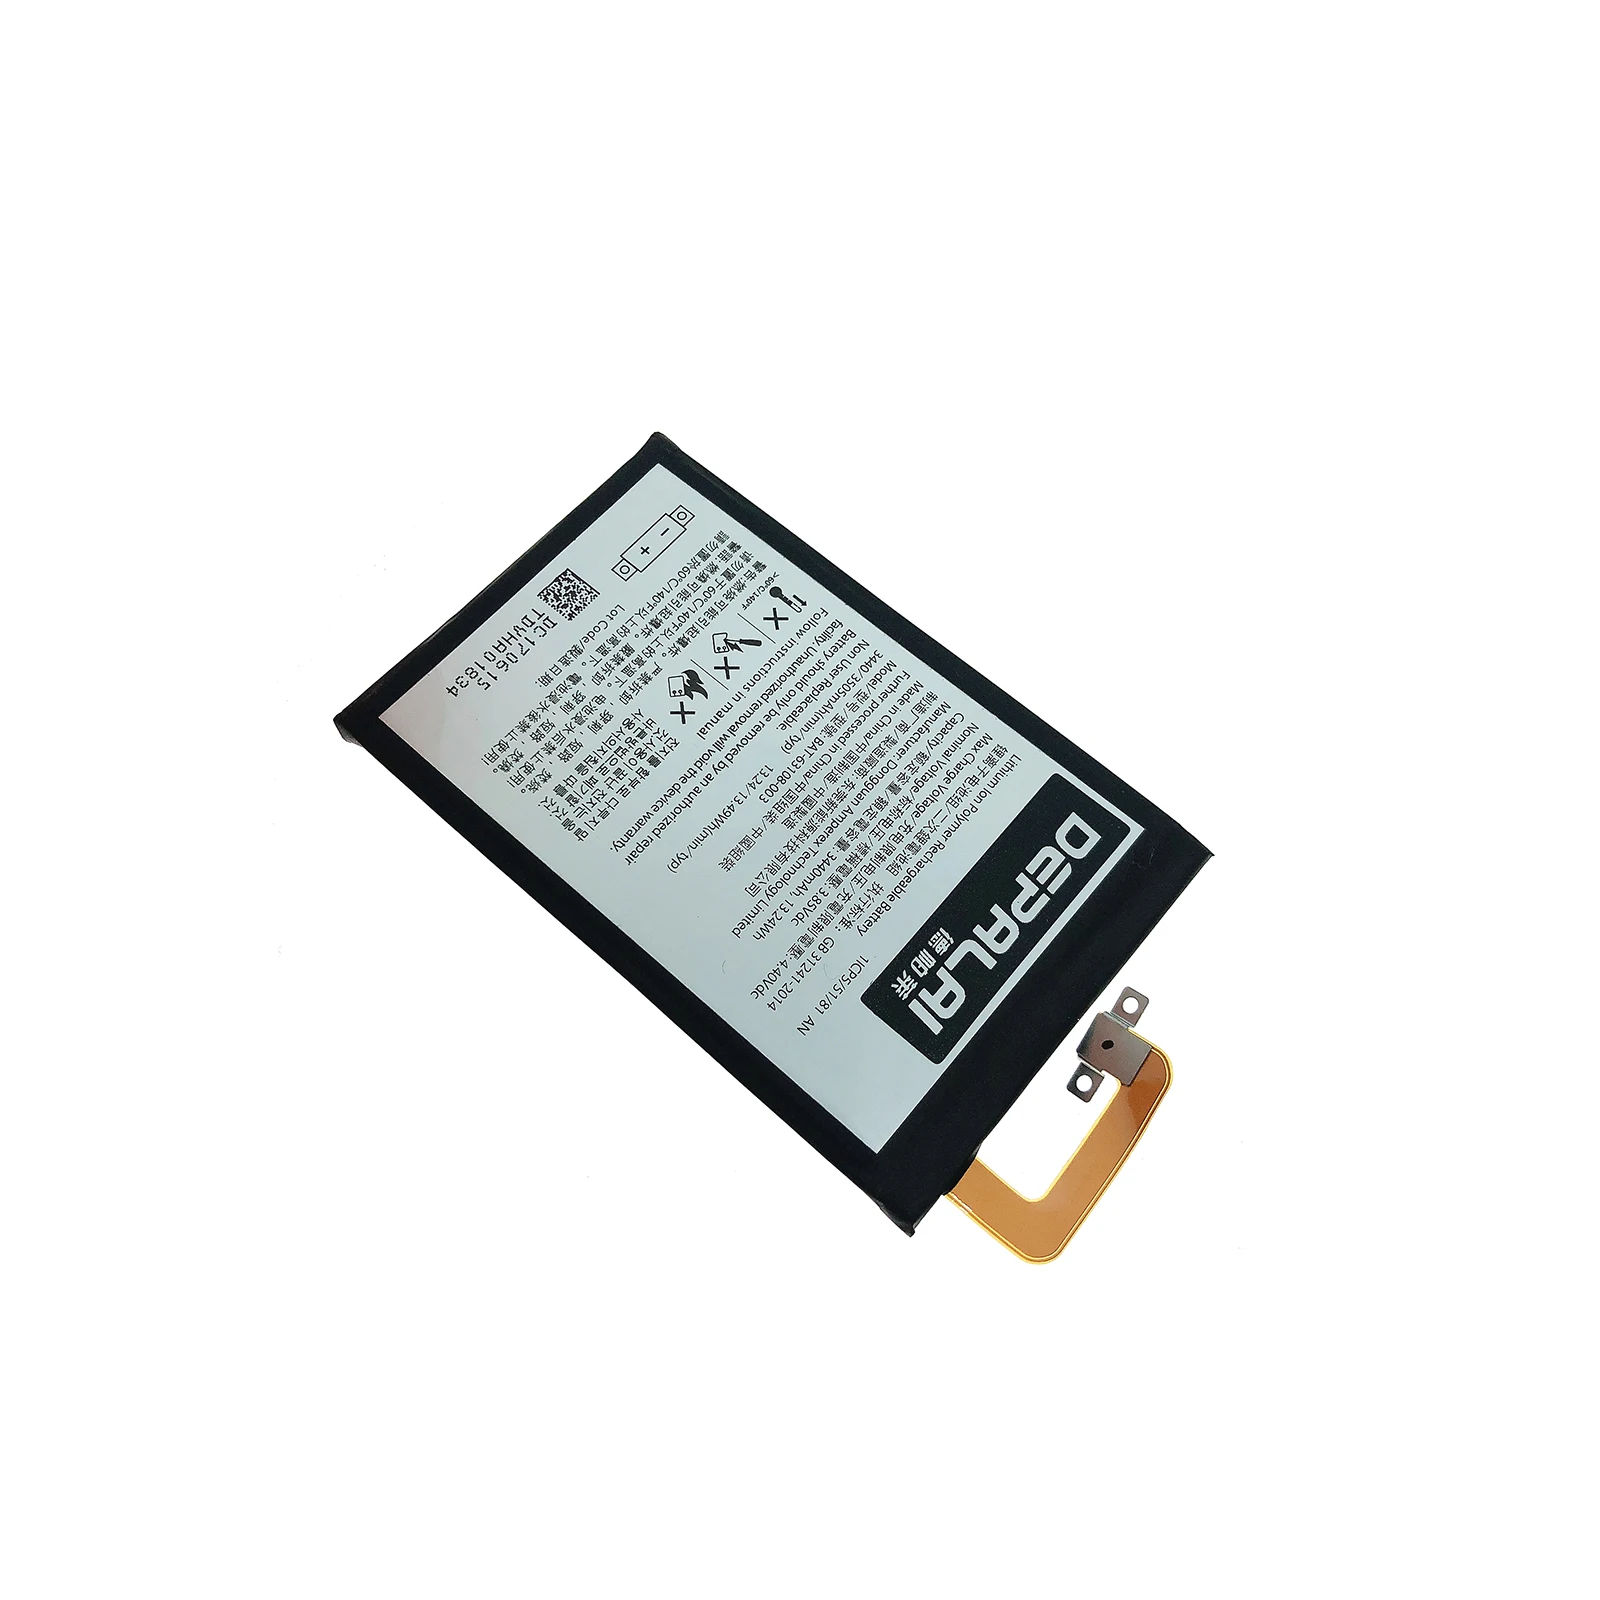 Baterija tinka Alcatel TCL Mobiliojo Baterijos Modelis GPGB-63108-003 